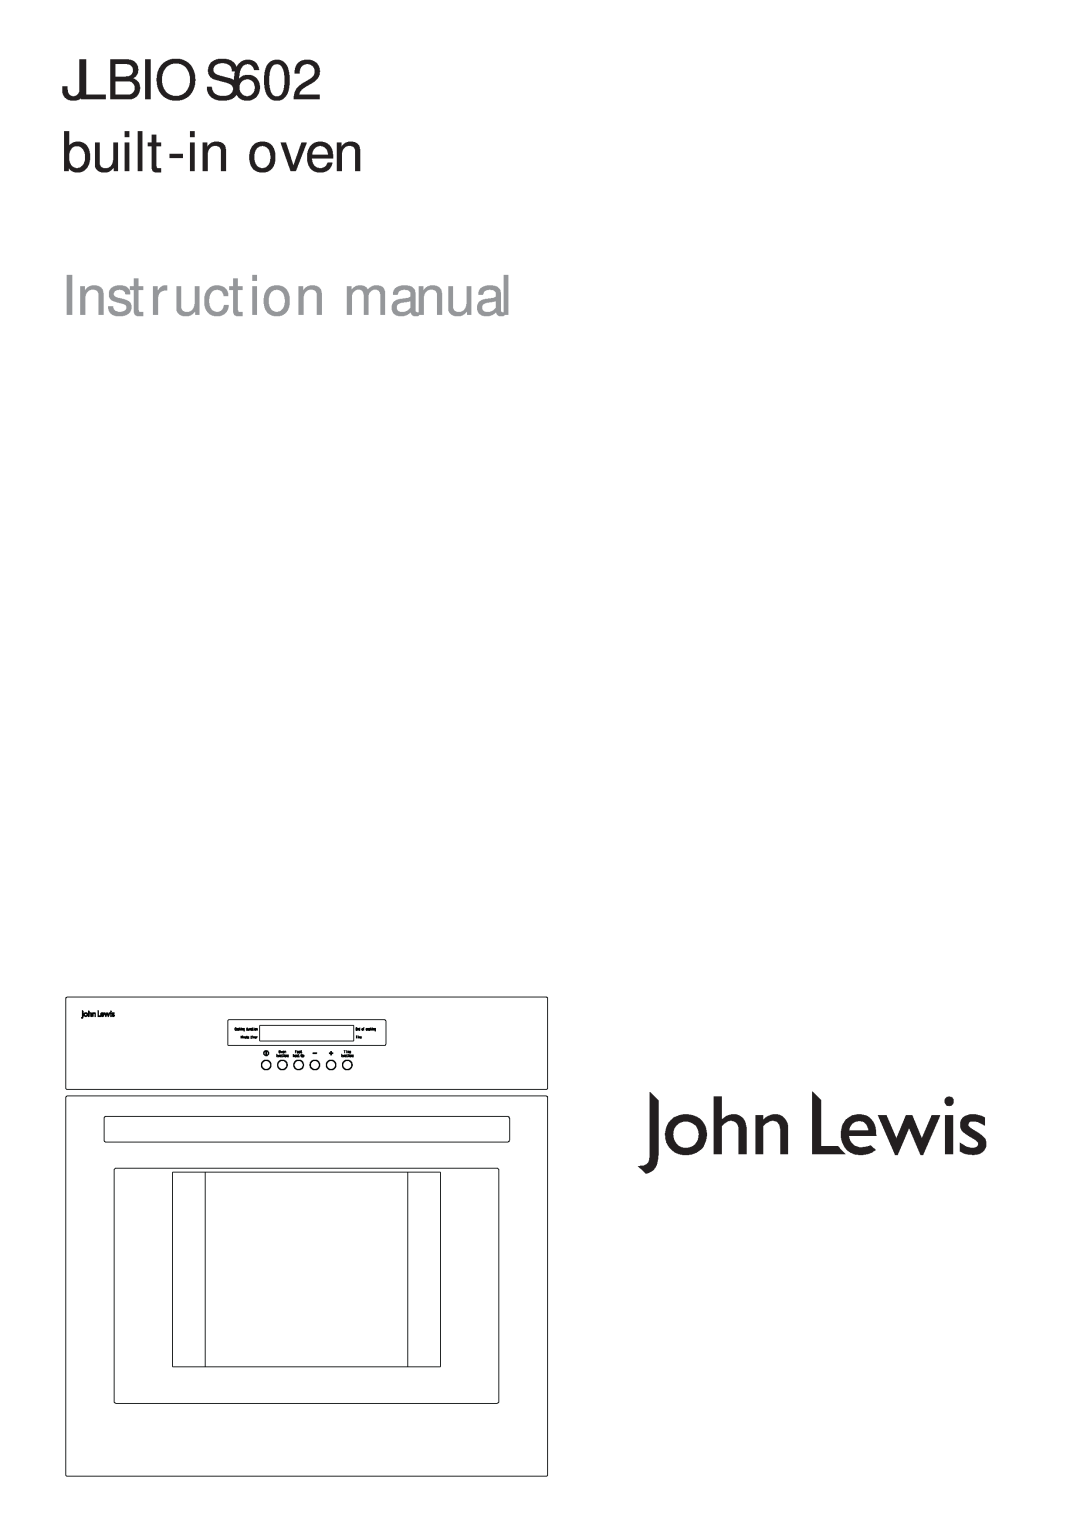 John Lewis instruction manual Instruction manual, JLBIOS602 built-in oven 